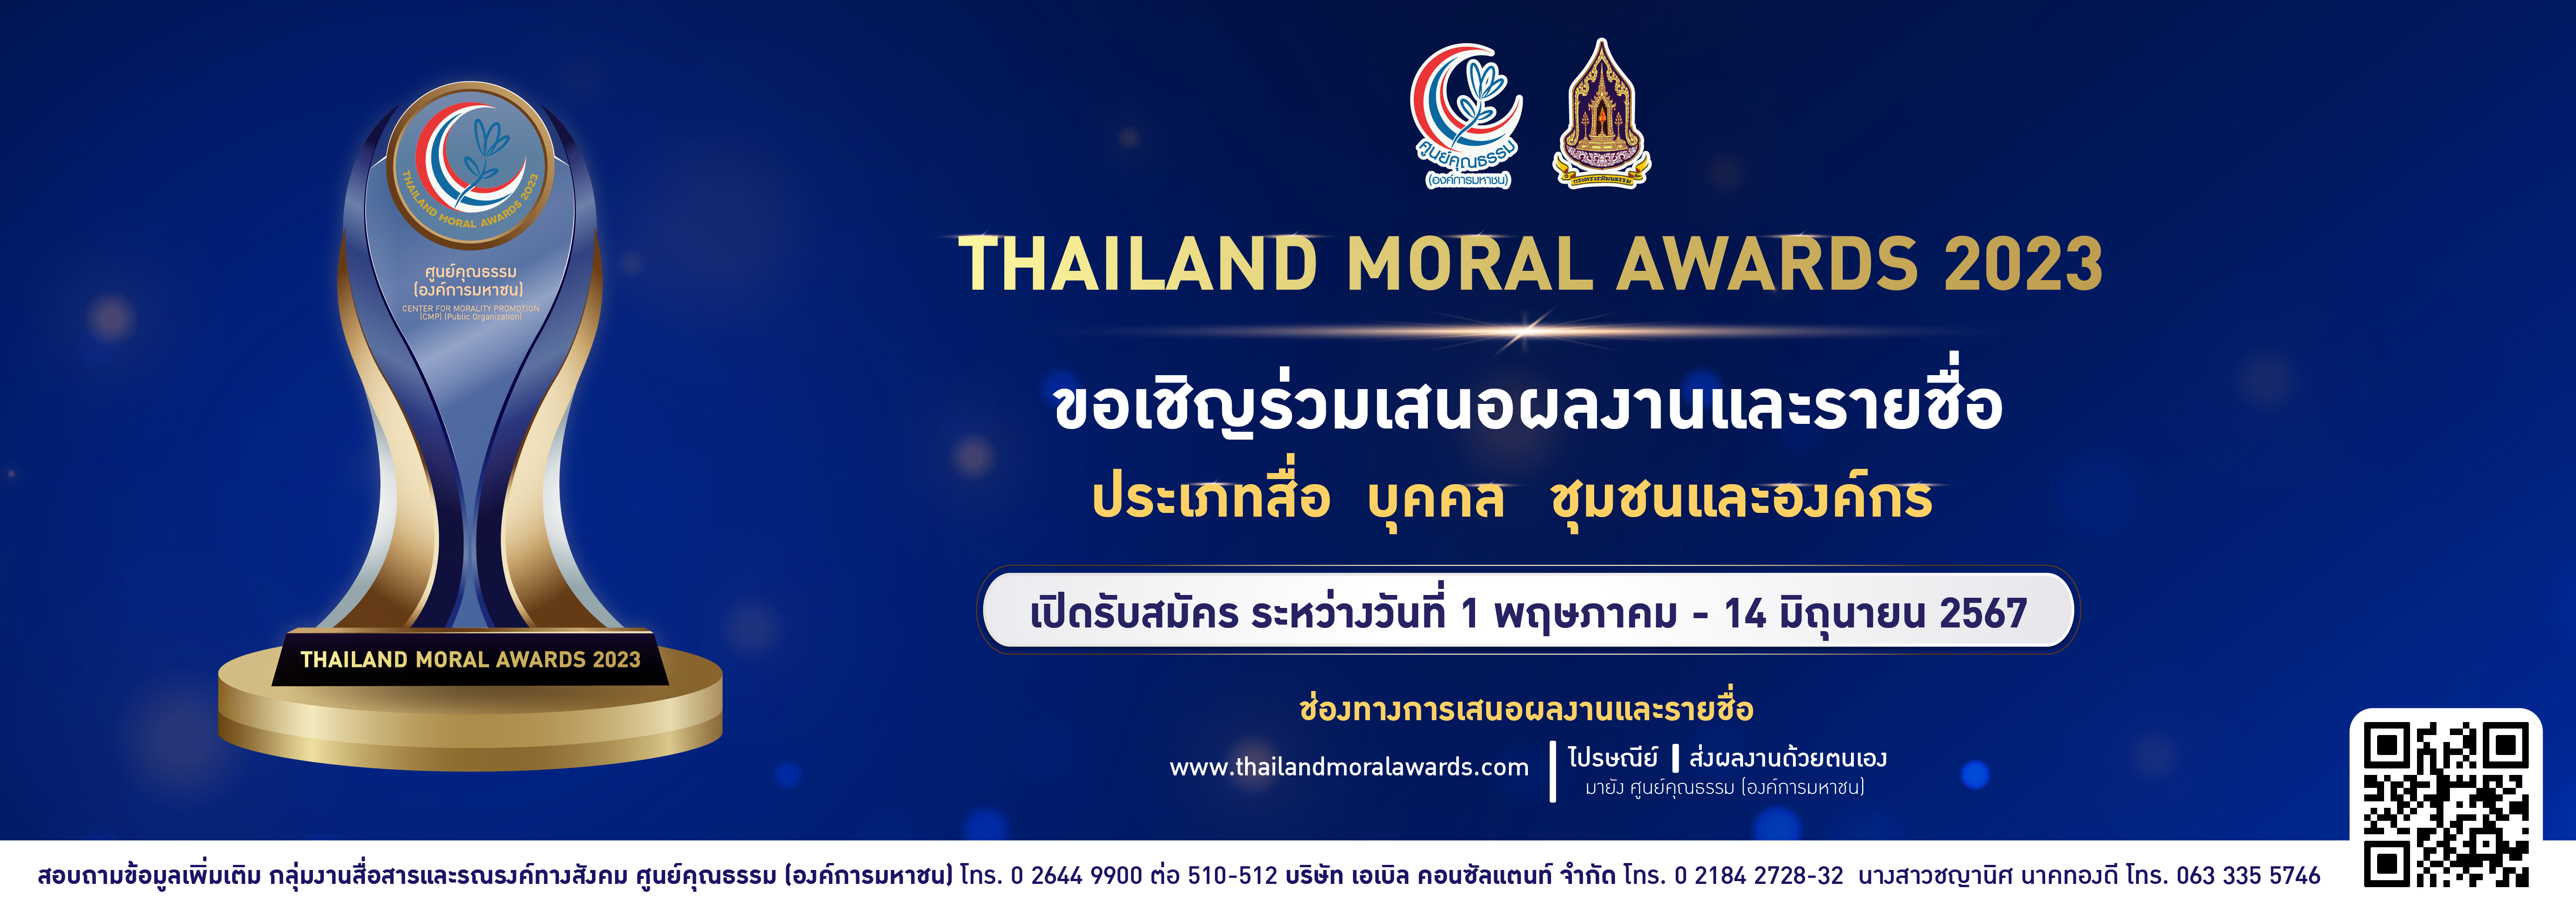 THAILAND MORAL AWARDS 2023